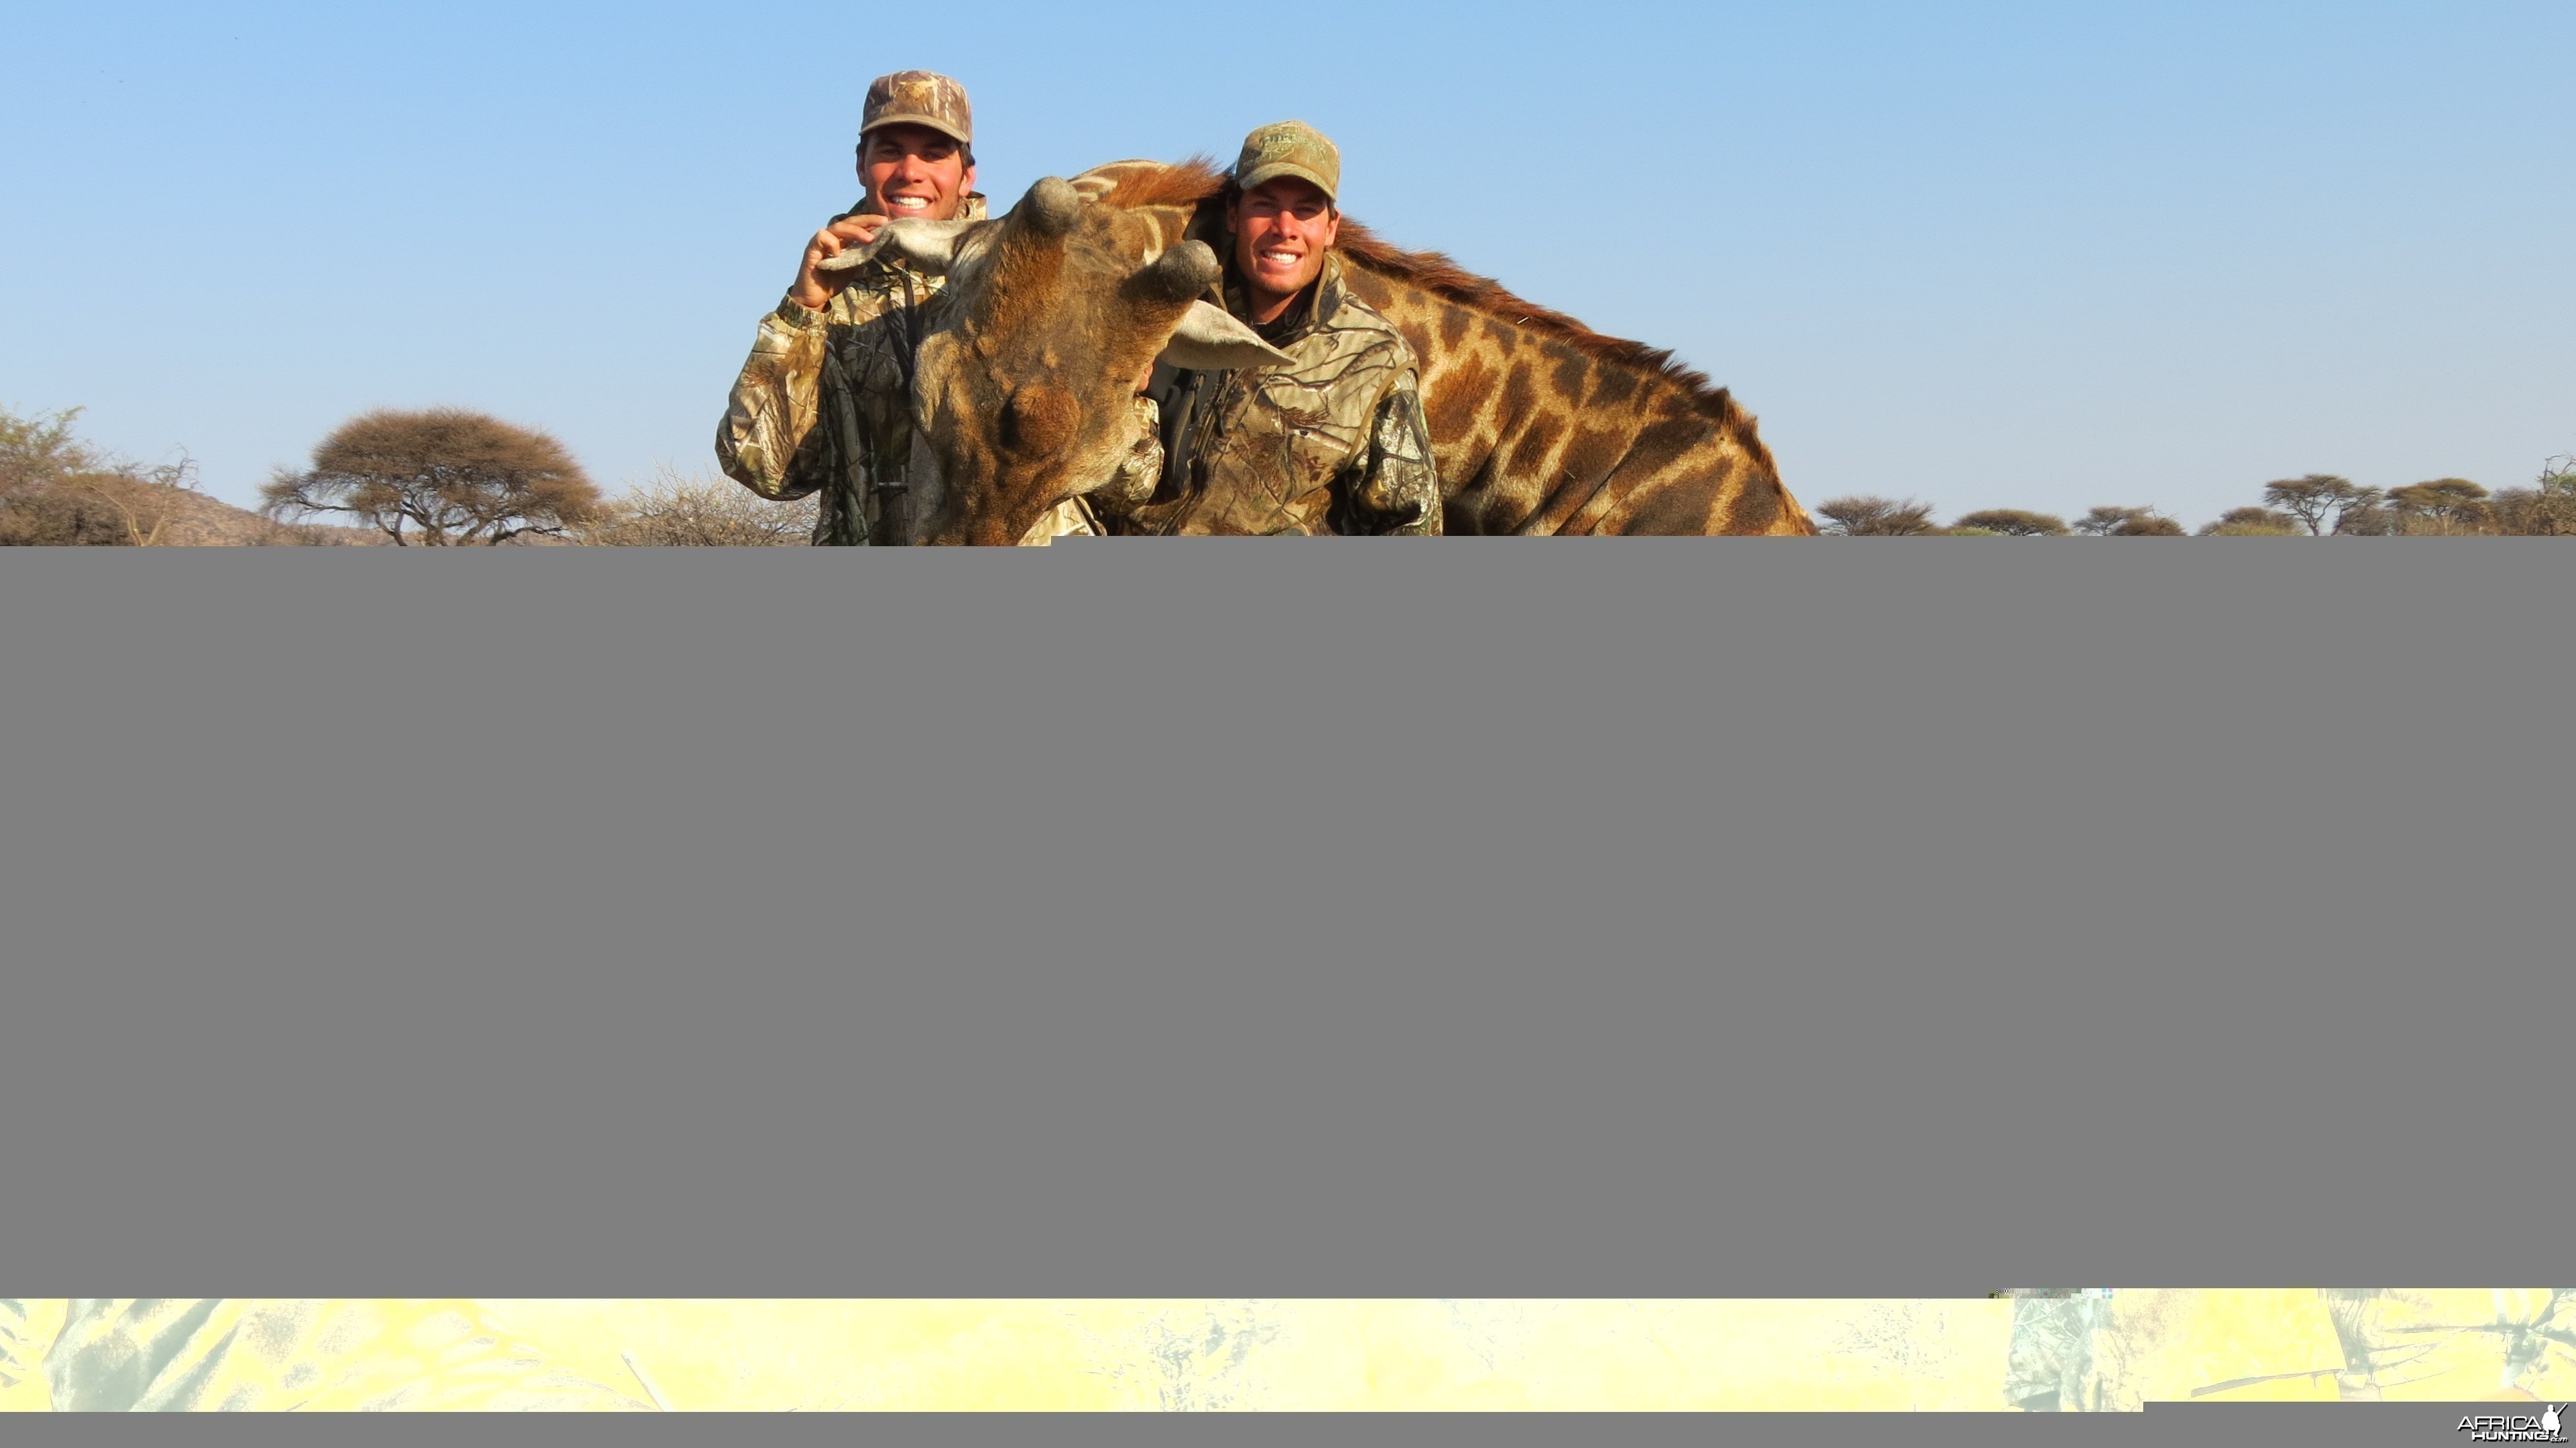 Giraffe hunted with Ozondjahe Hunting Safaris in Namibia